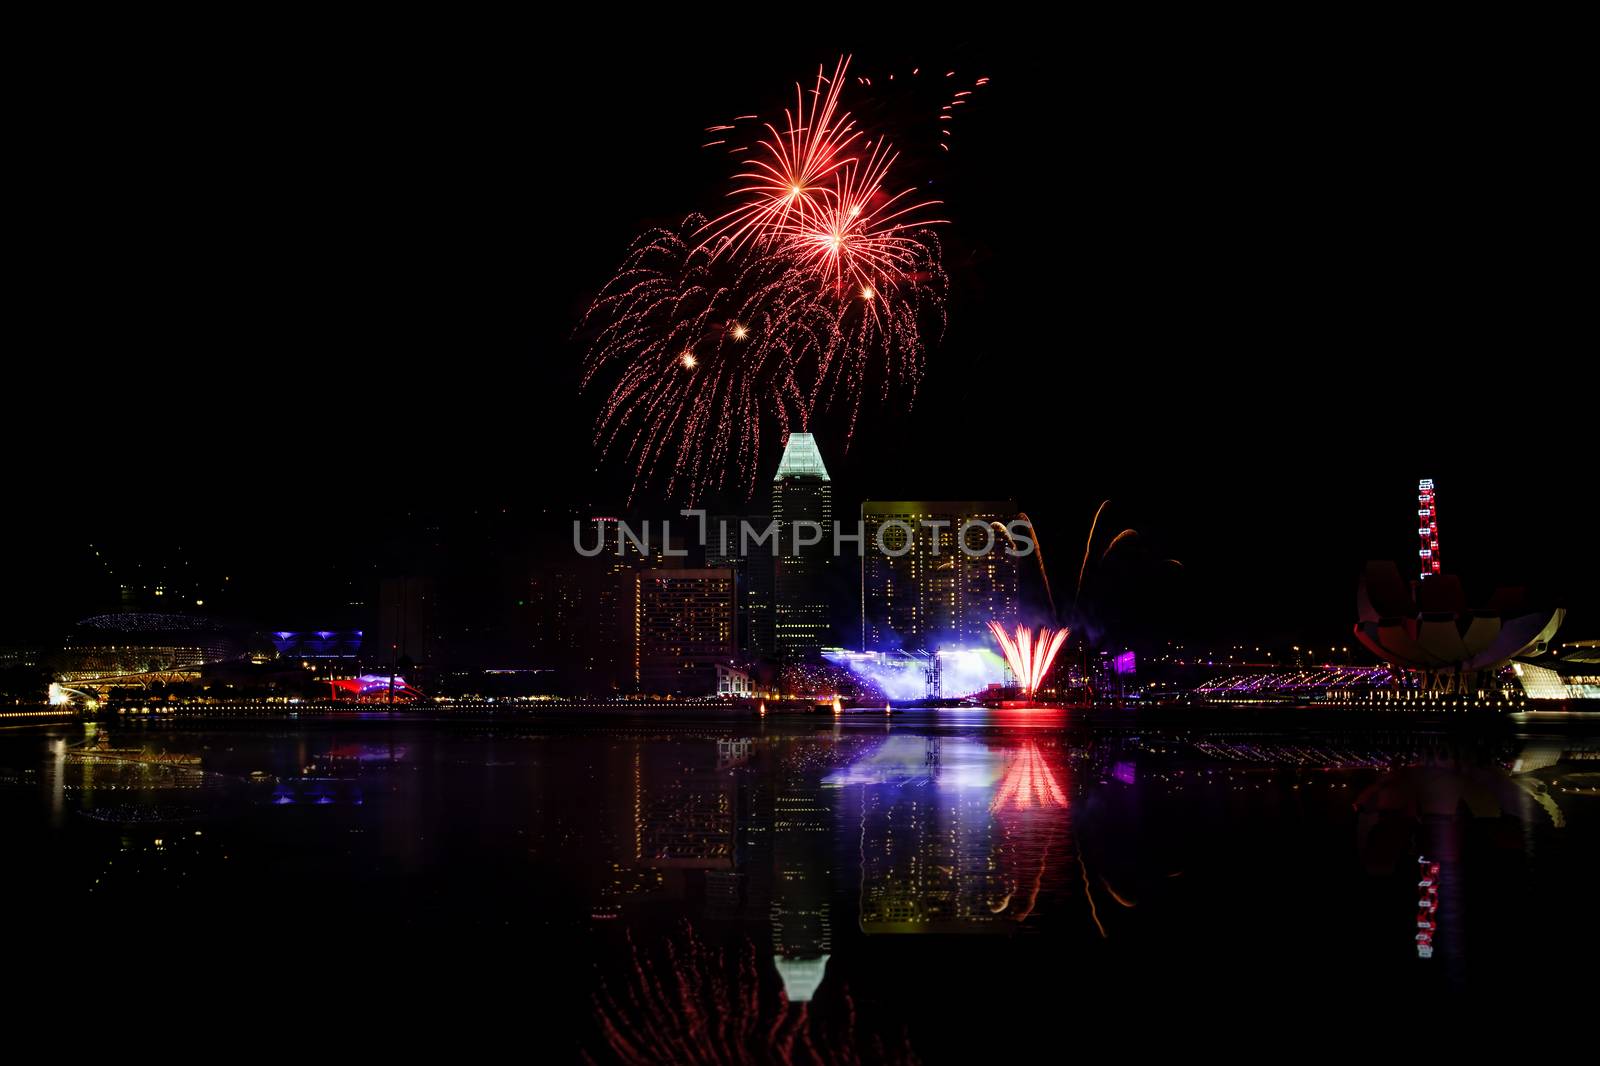 Singapore Fireworks by kjorgen